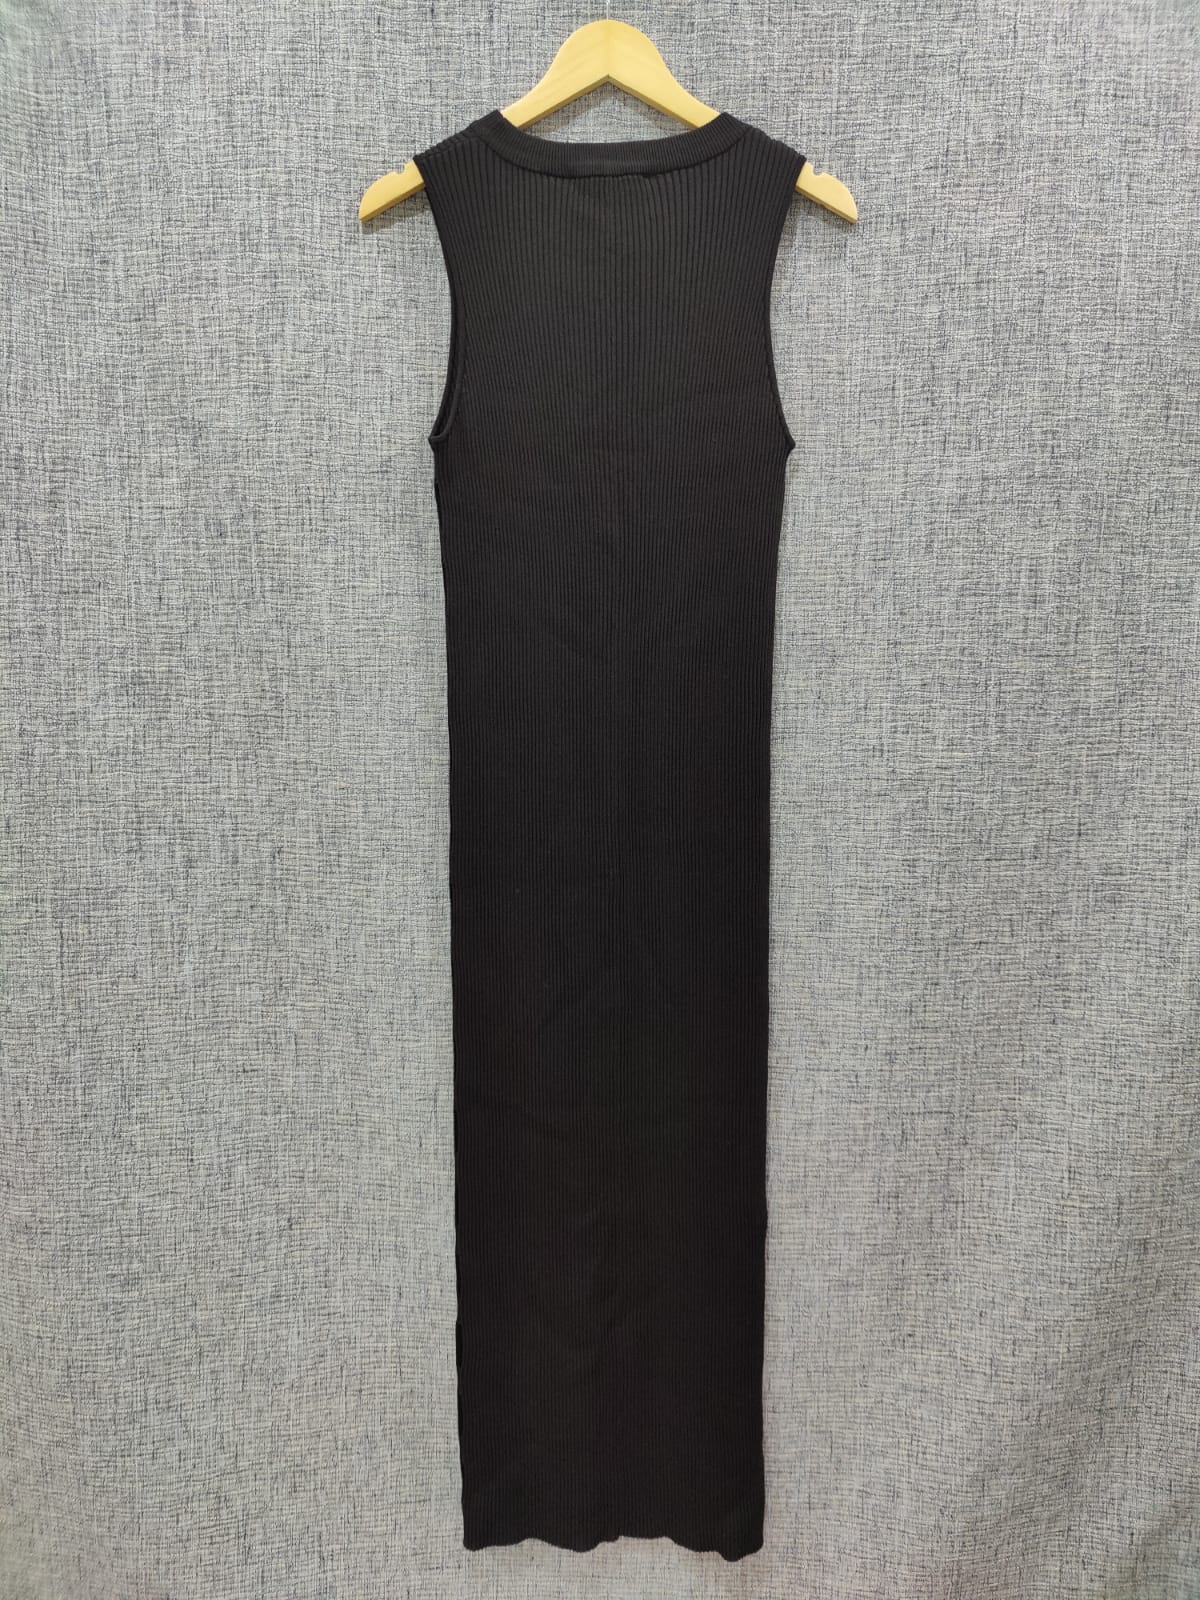 ZARA Solid Black Side Cutout Dress | Relove